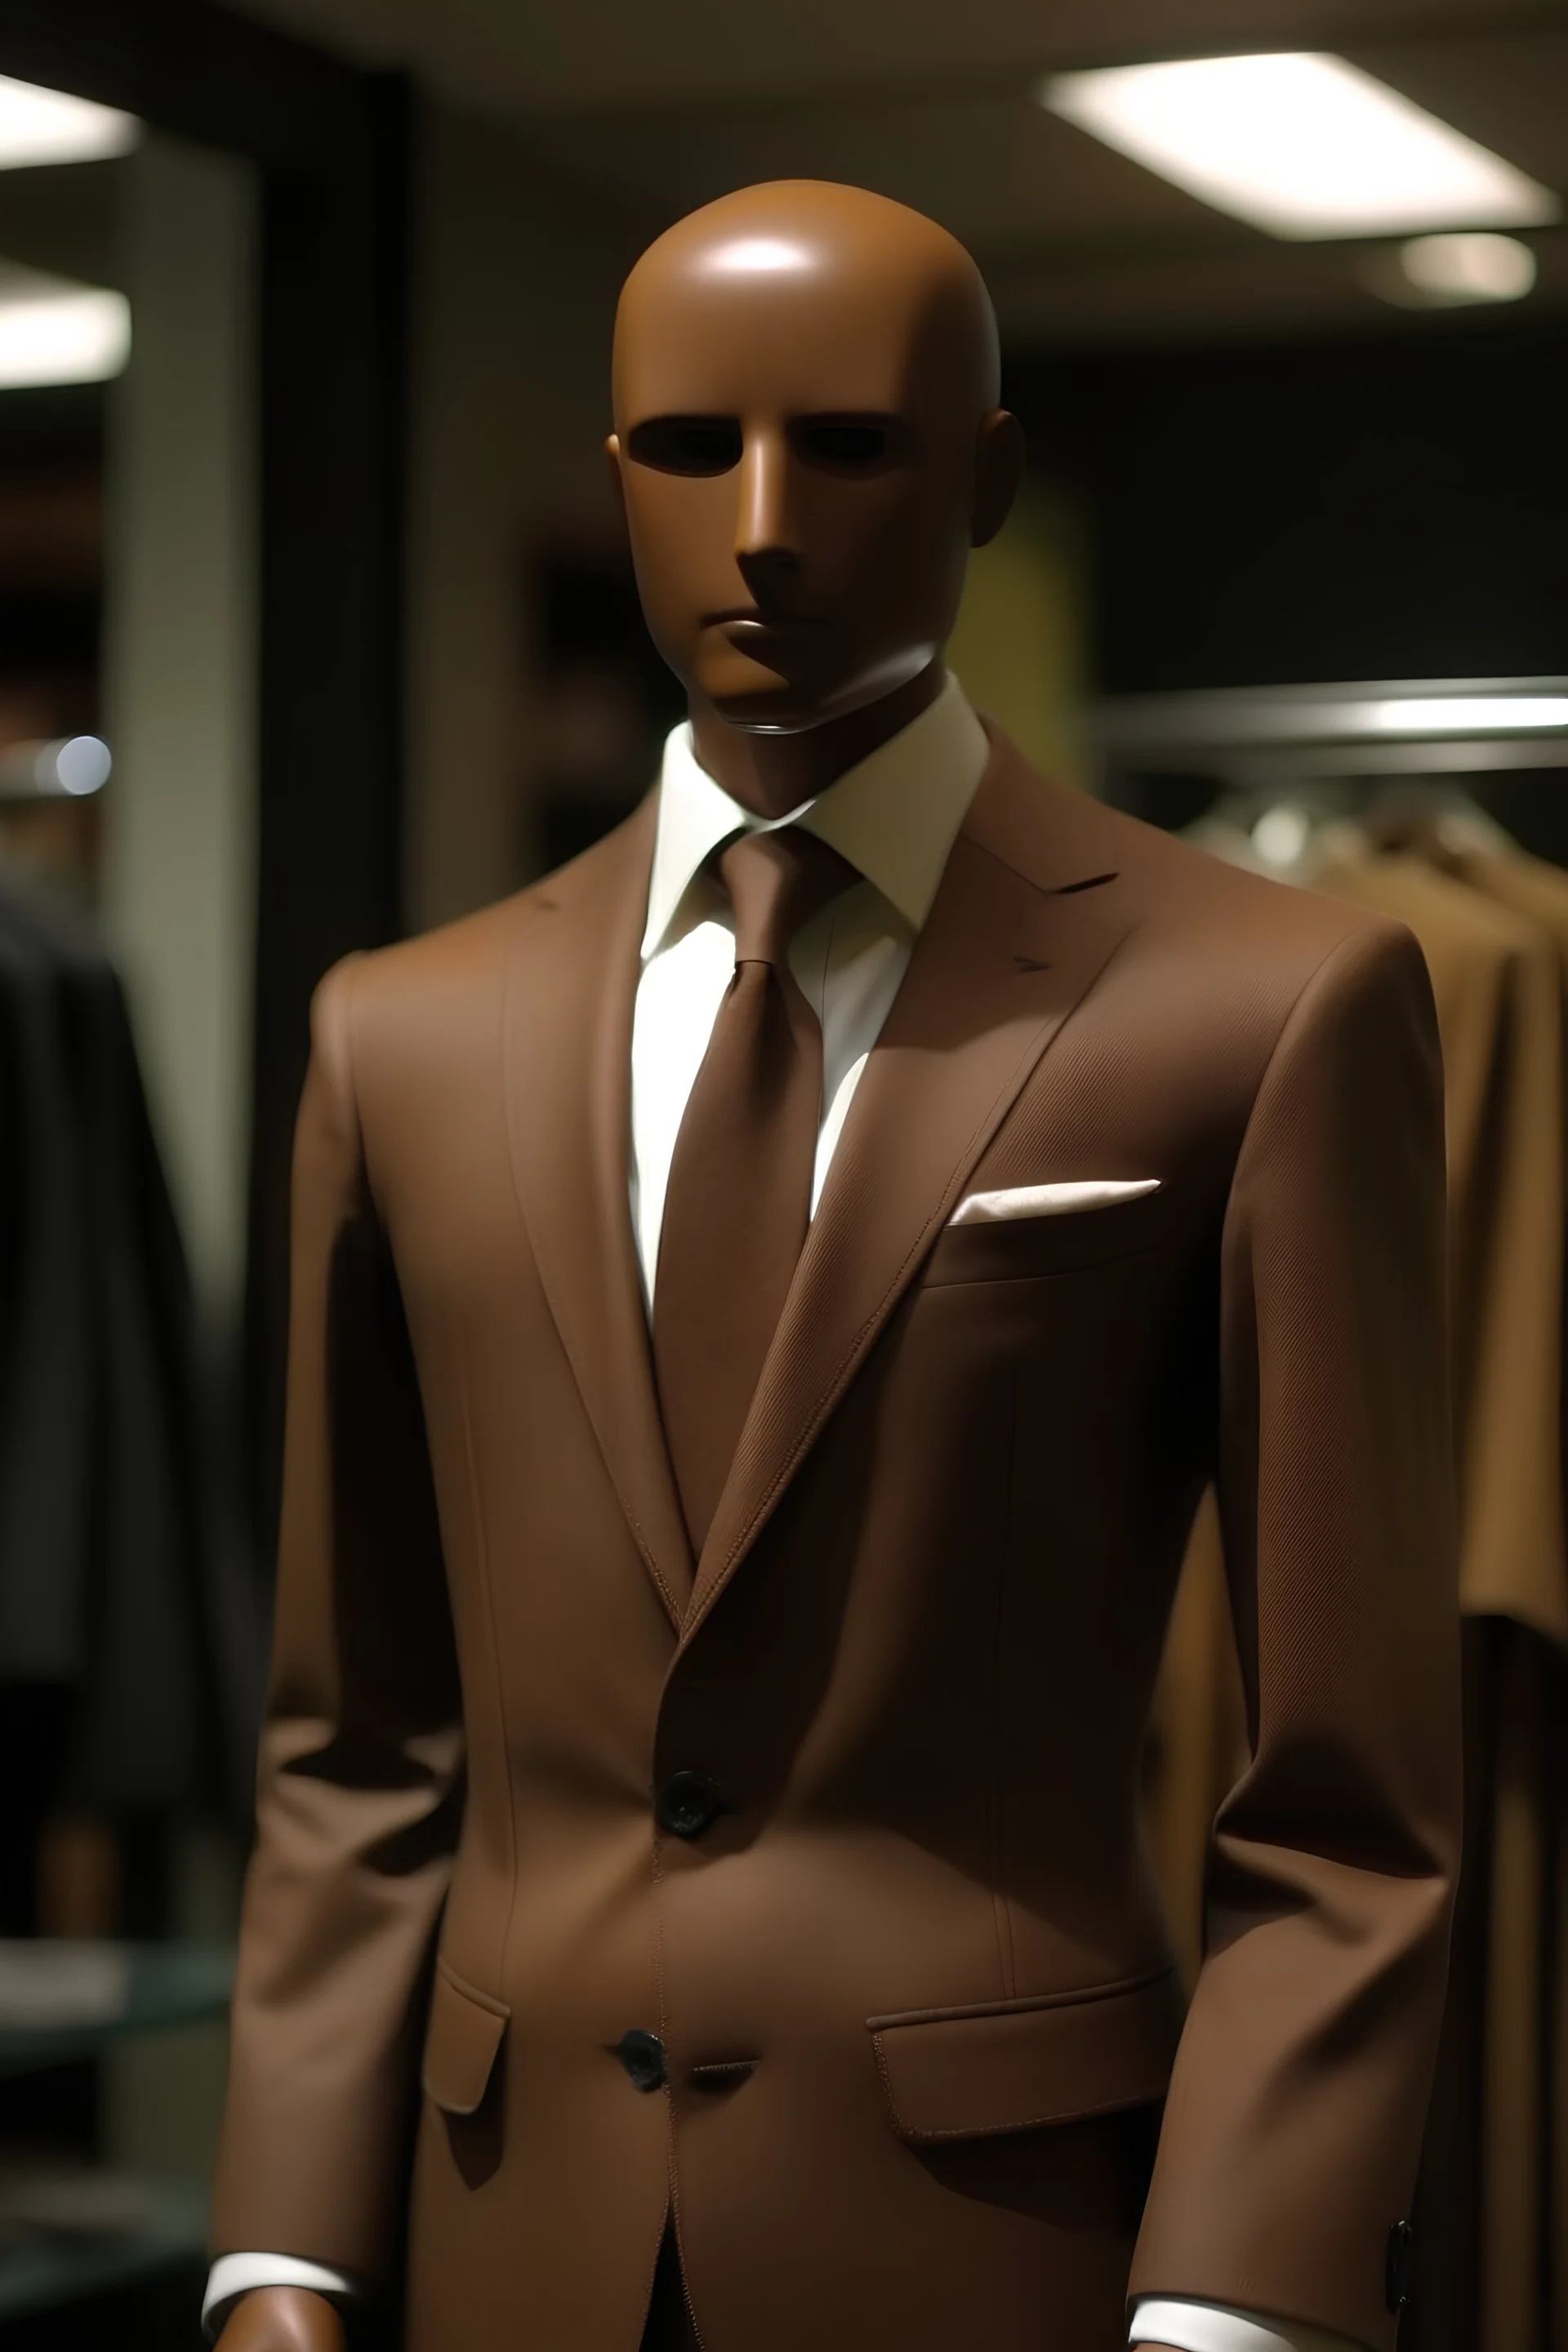 brown manikin in a suit